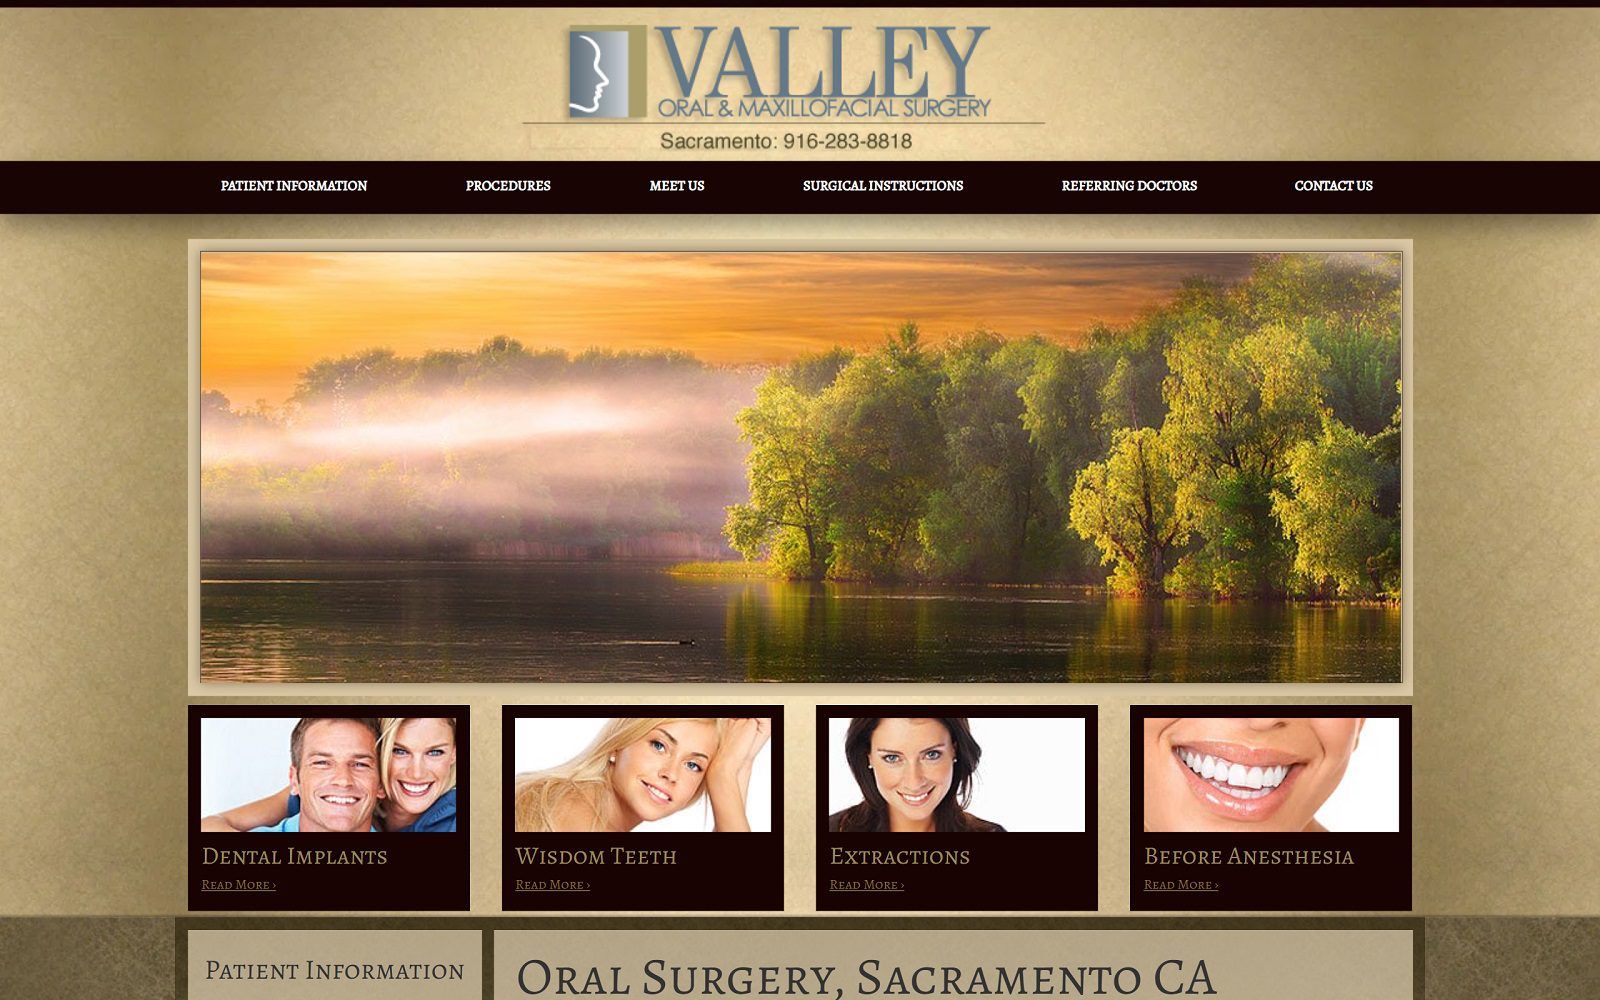 The screenshot of valley oral and maxillofacial surgery website